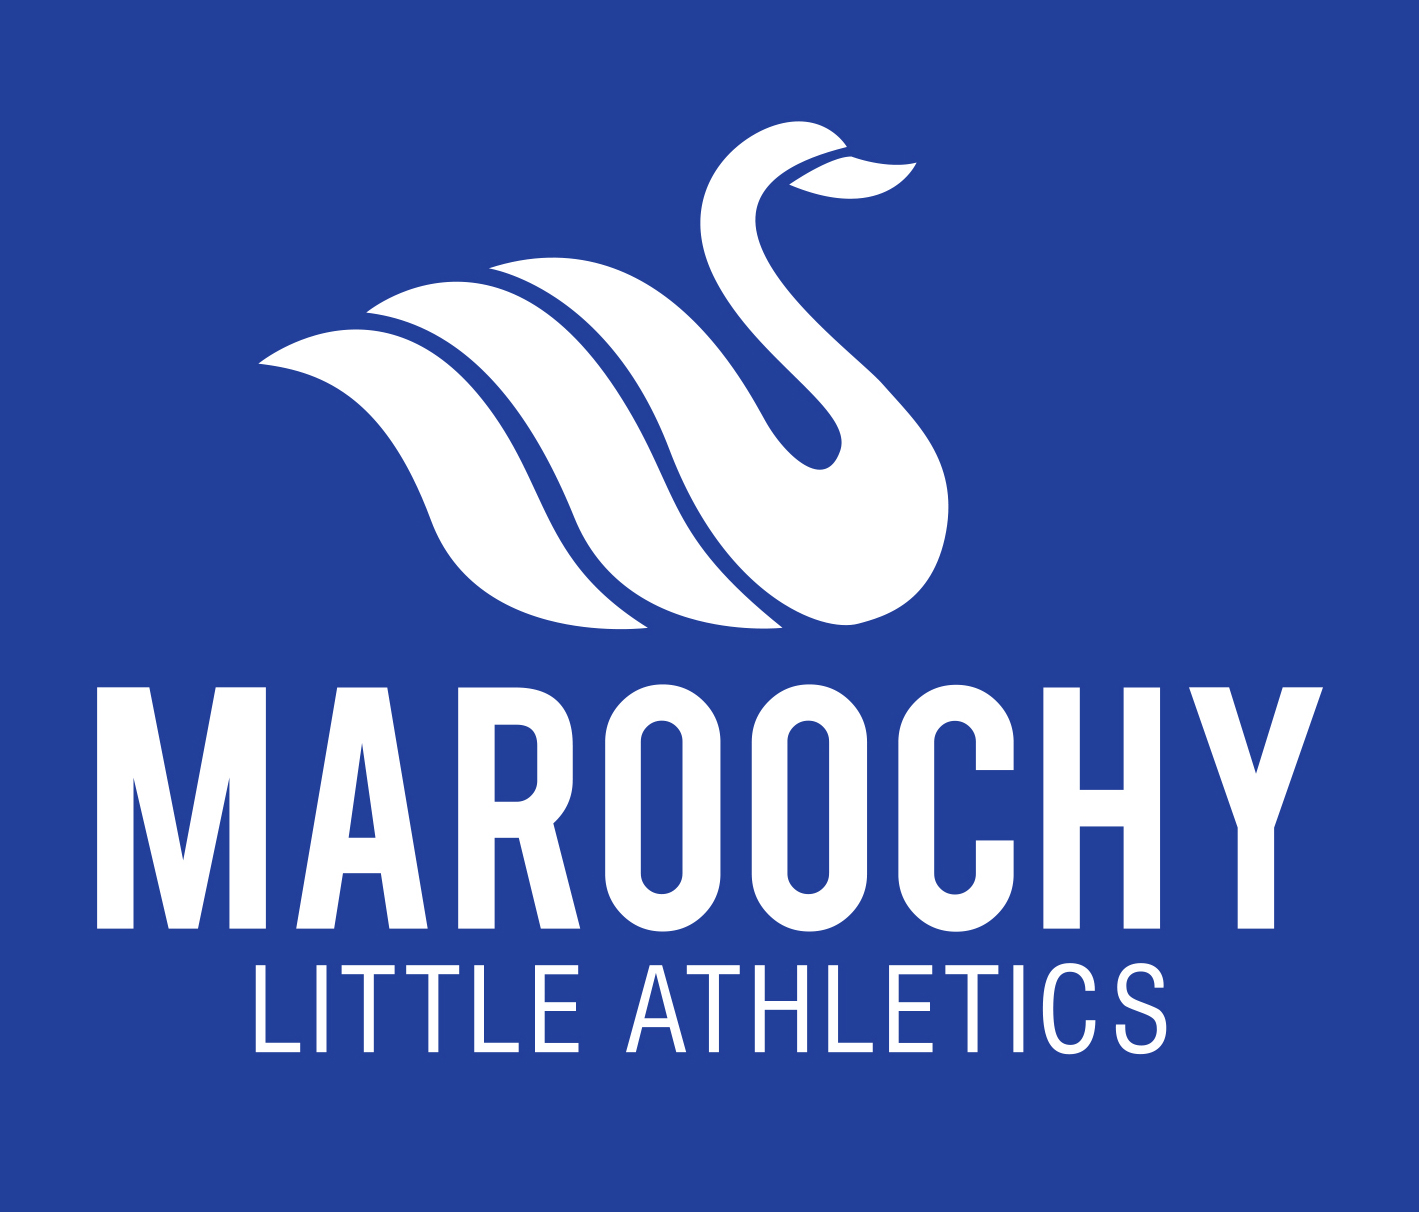 Maroochy Little Athletics